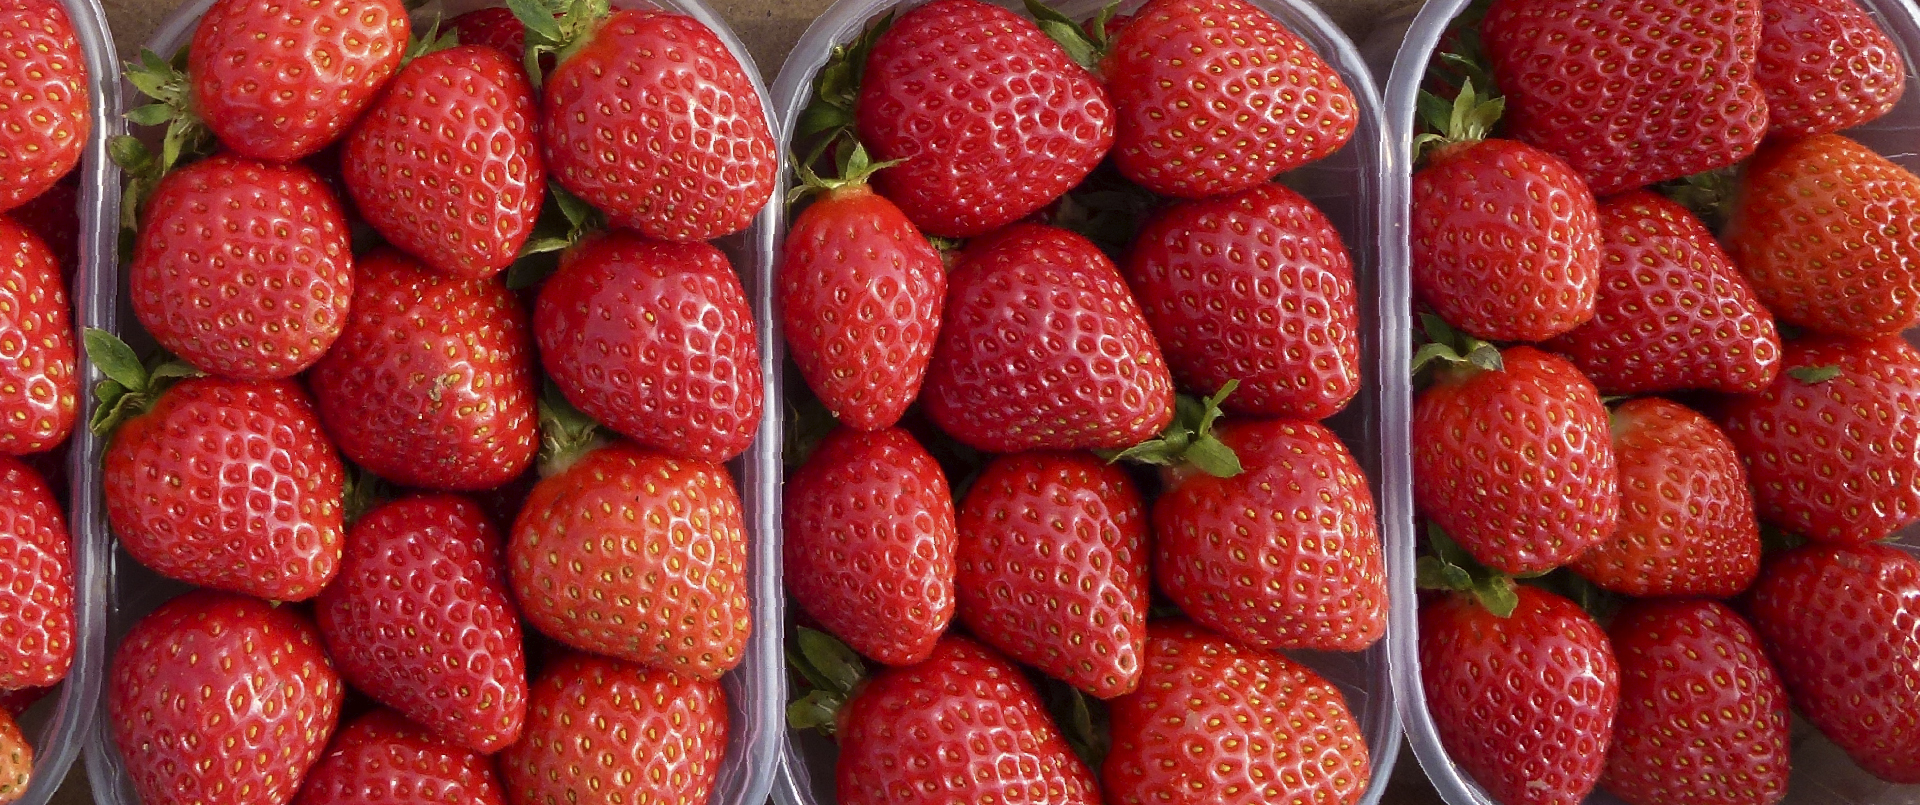 Greek Berries, Greek Strawberry